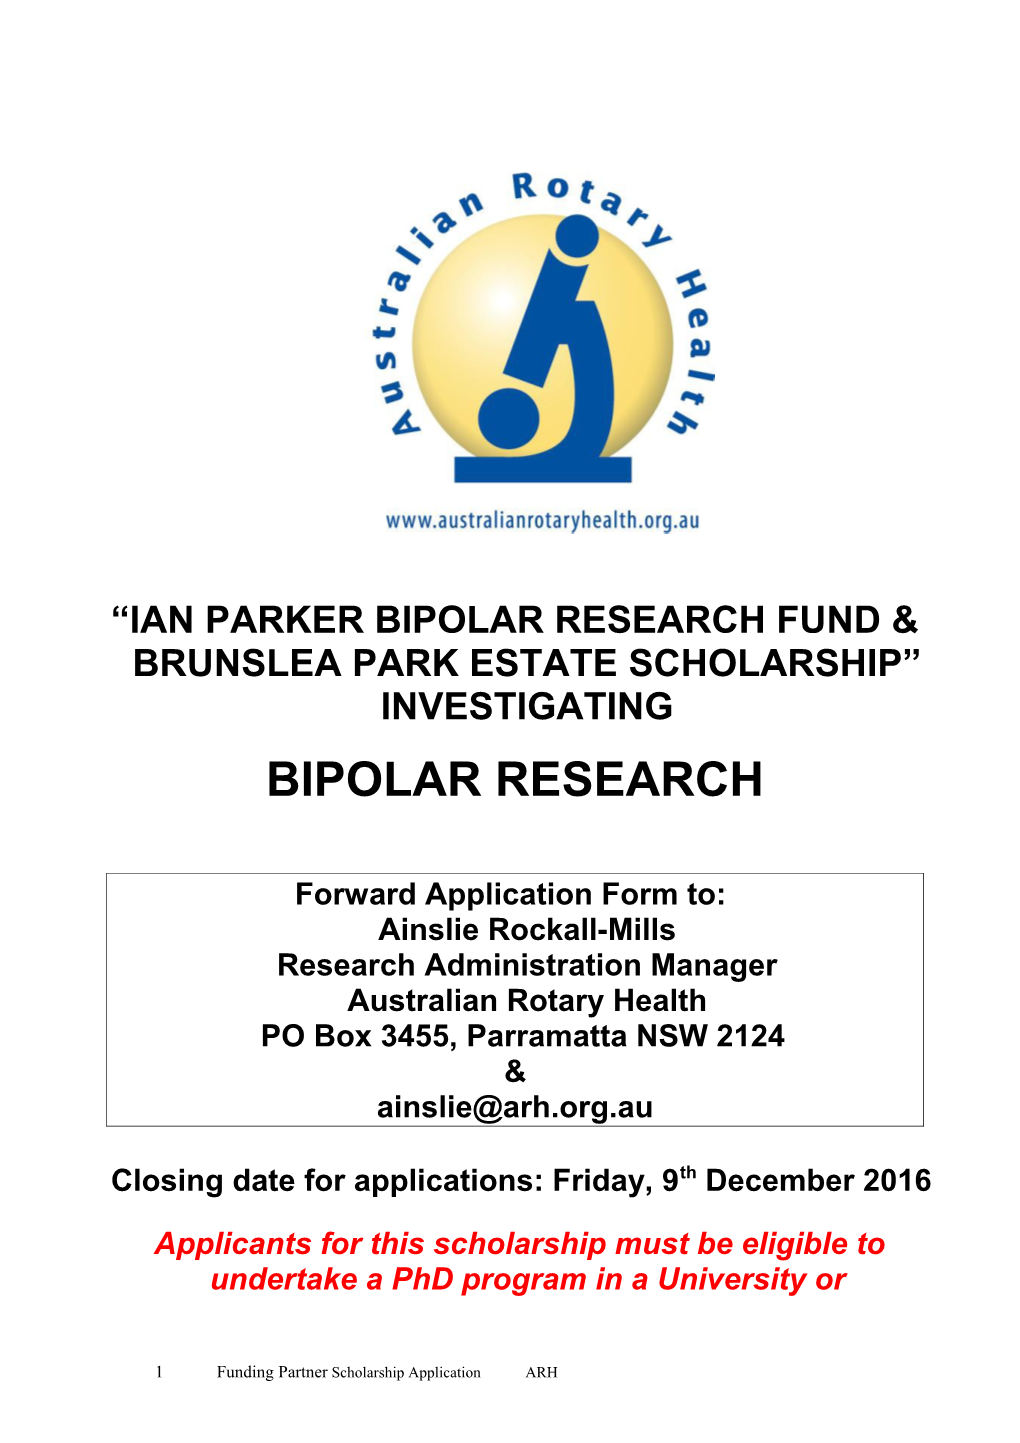 Ian Parker Bipolar Research Fund & Brunslea Park Estate Scholarship Investigating